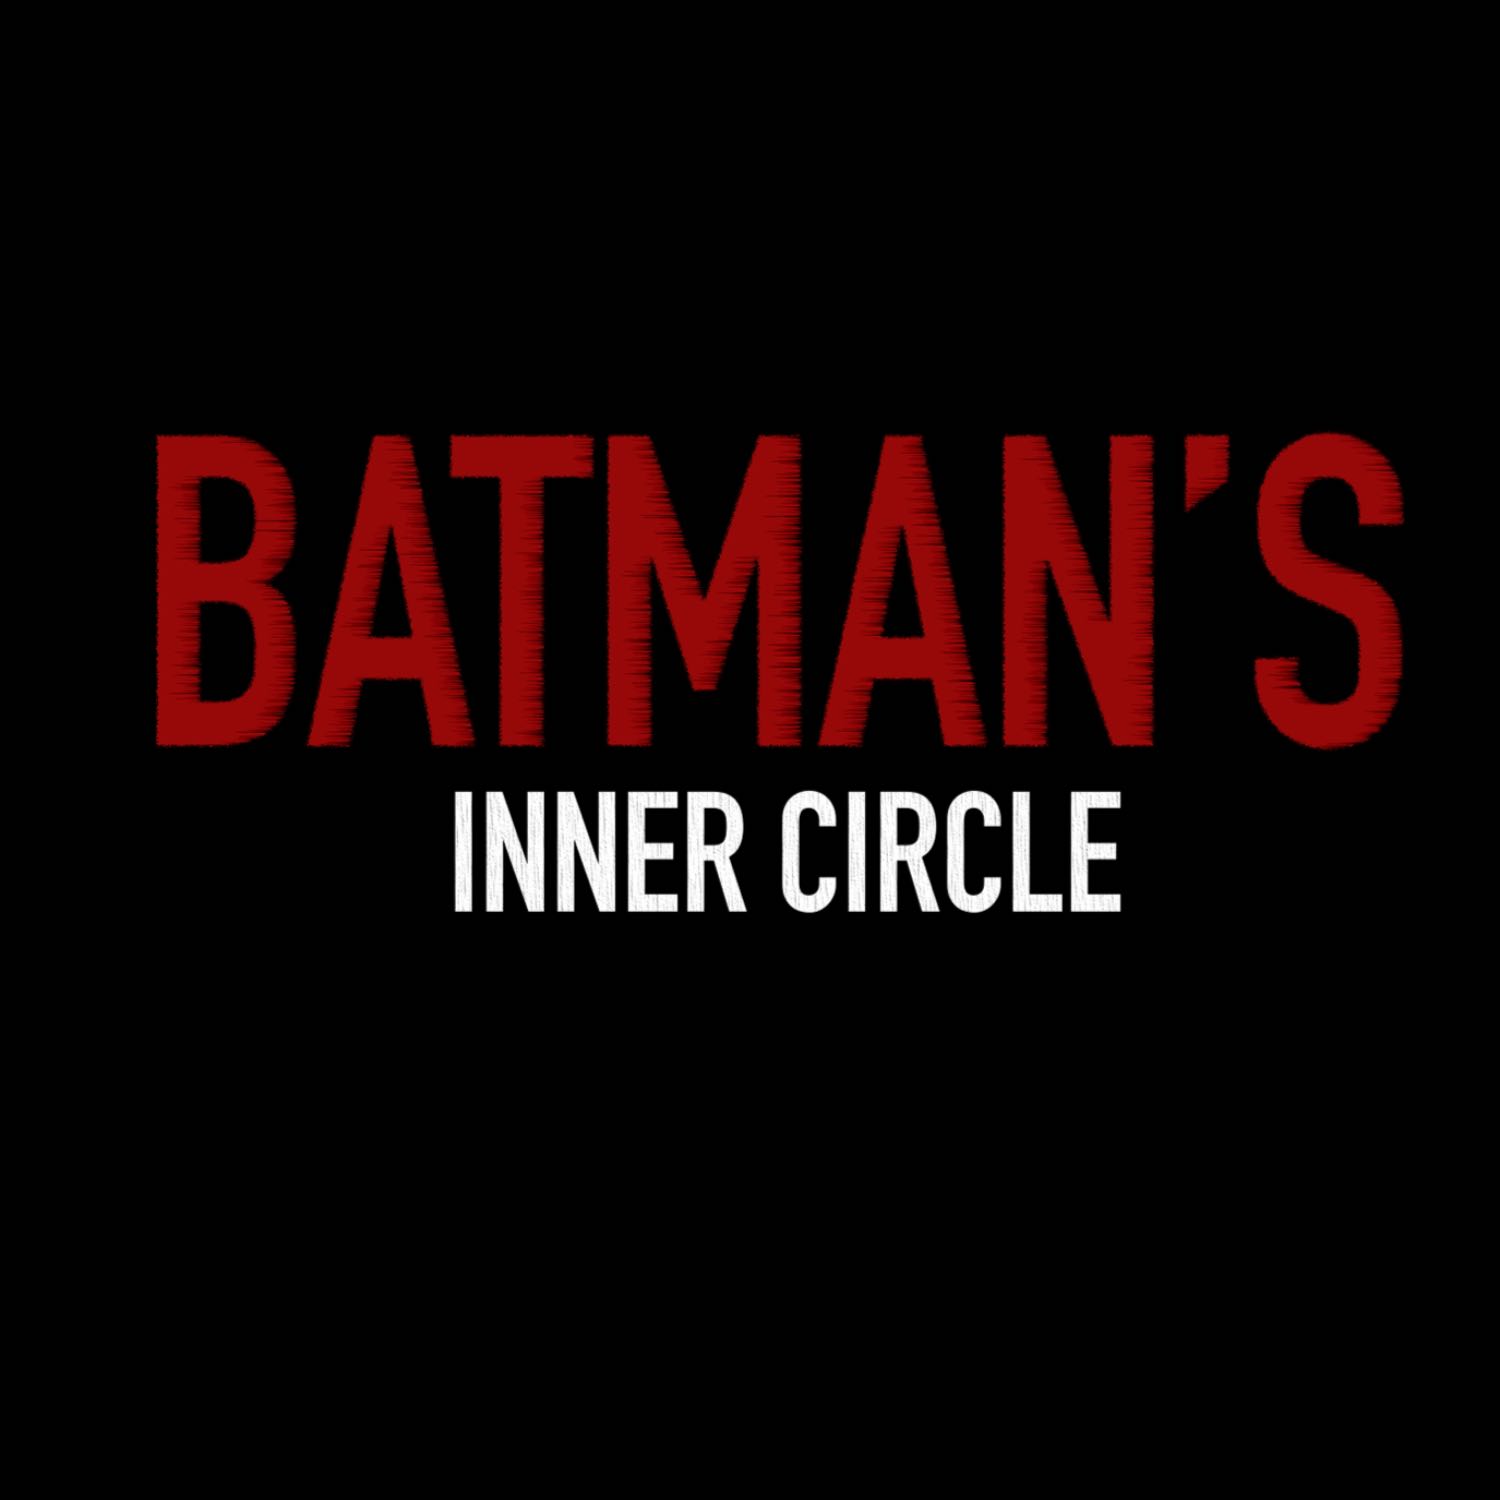 Batman's inner circle.